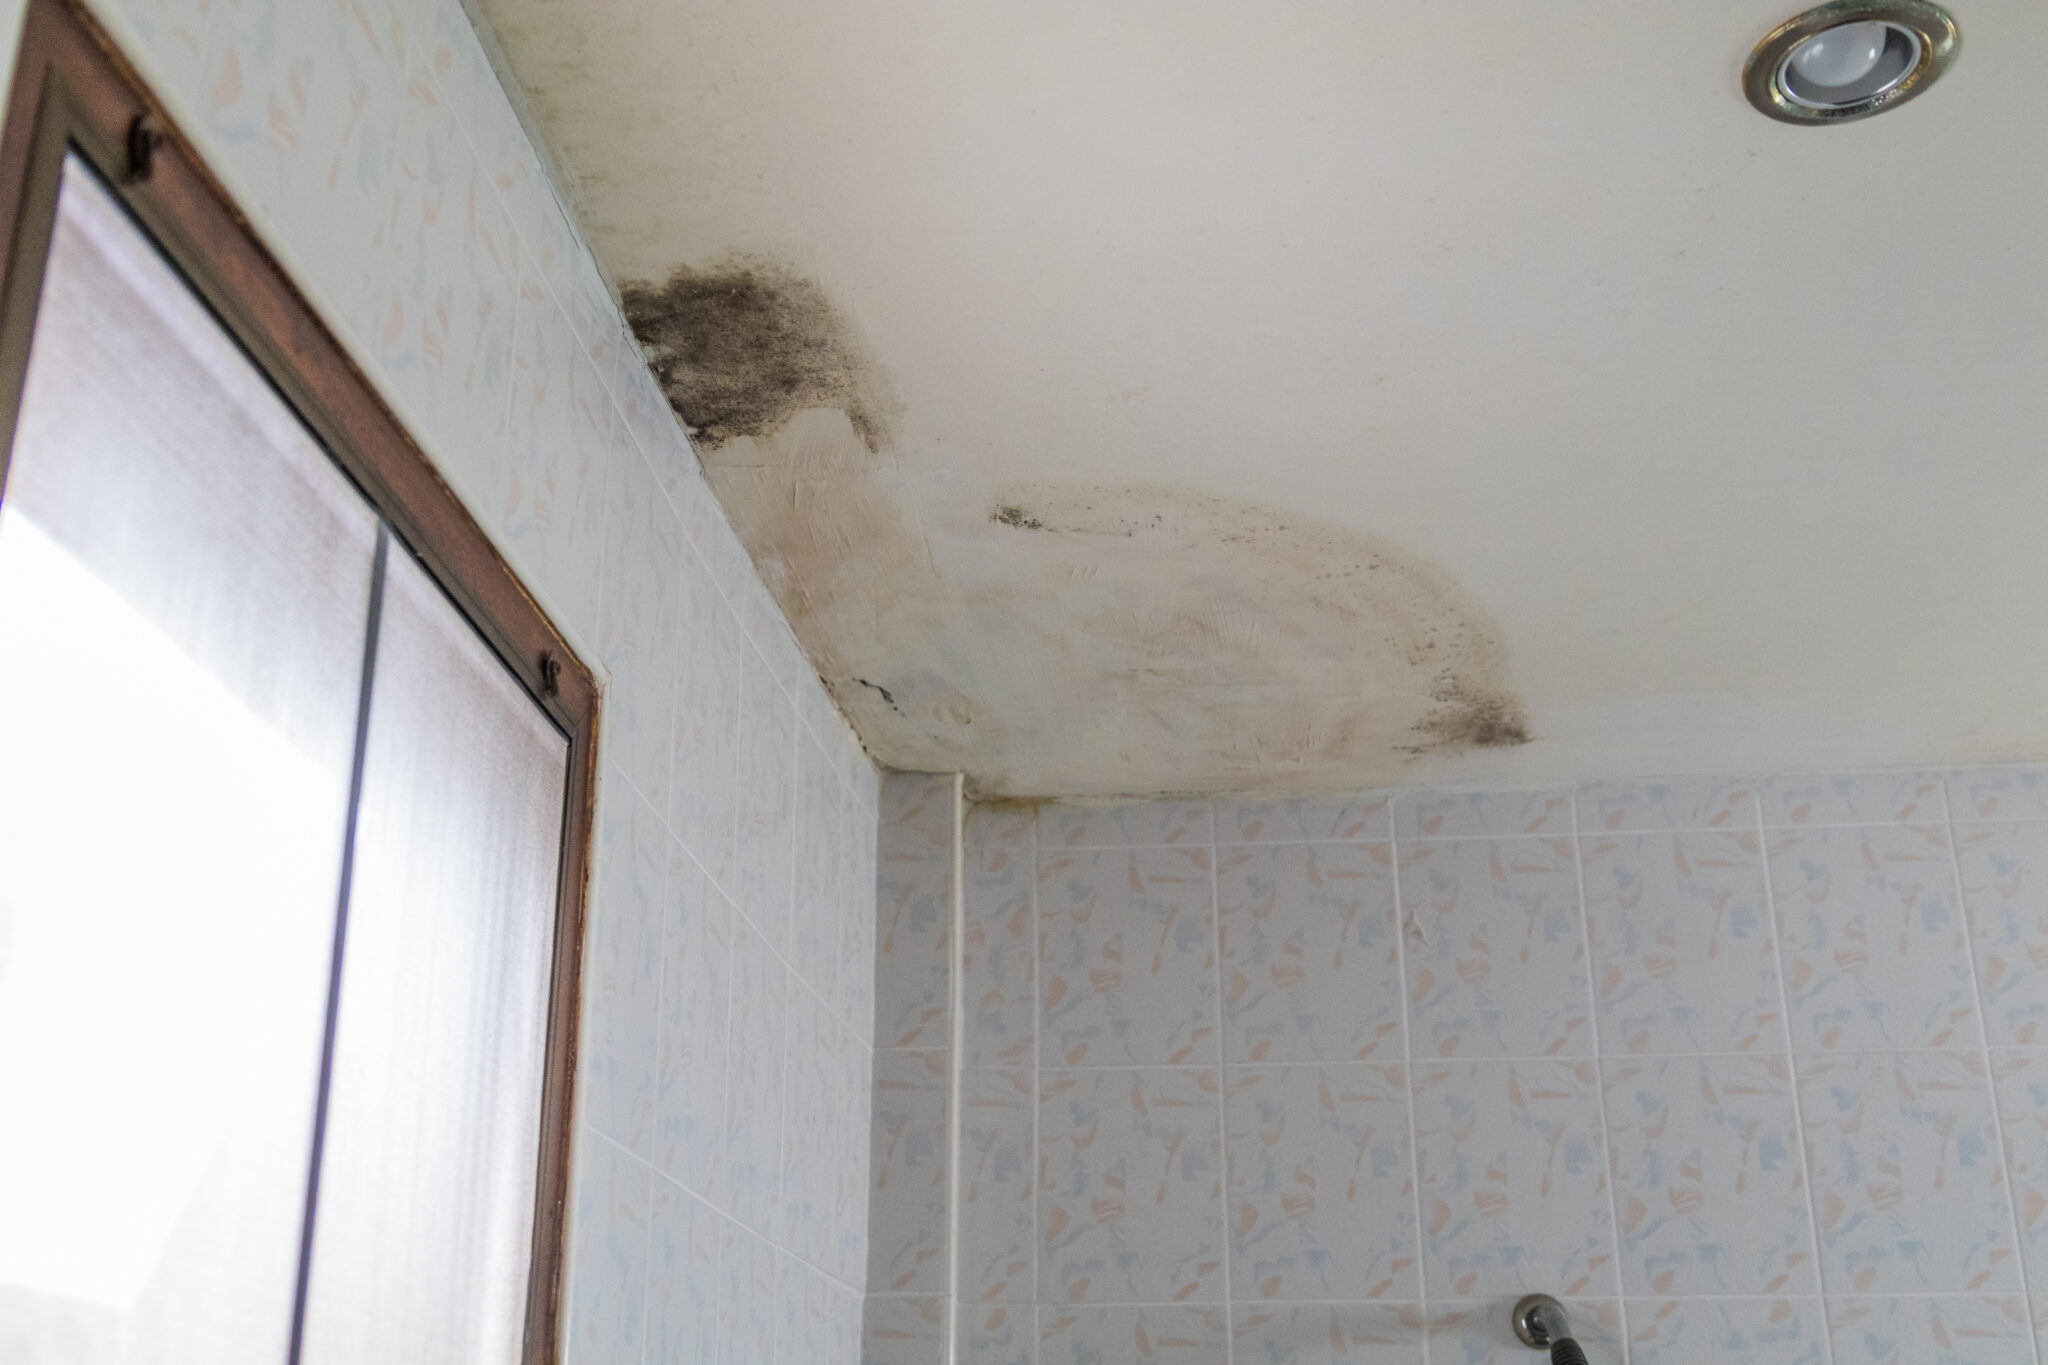 mold in bathroom ceiling harmful